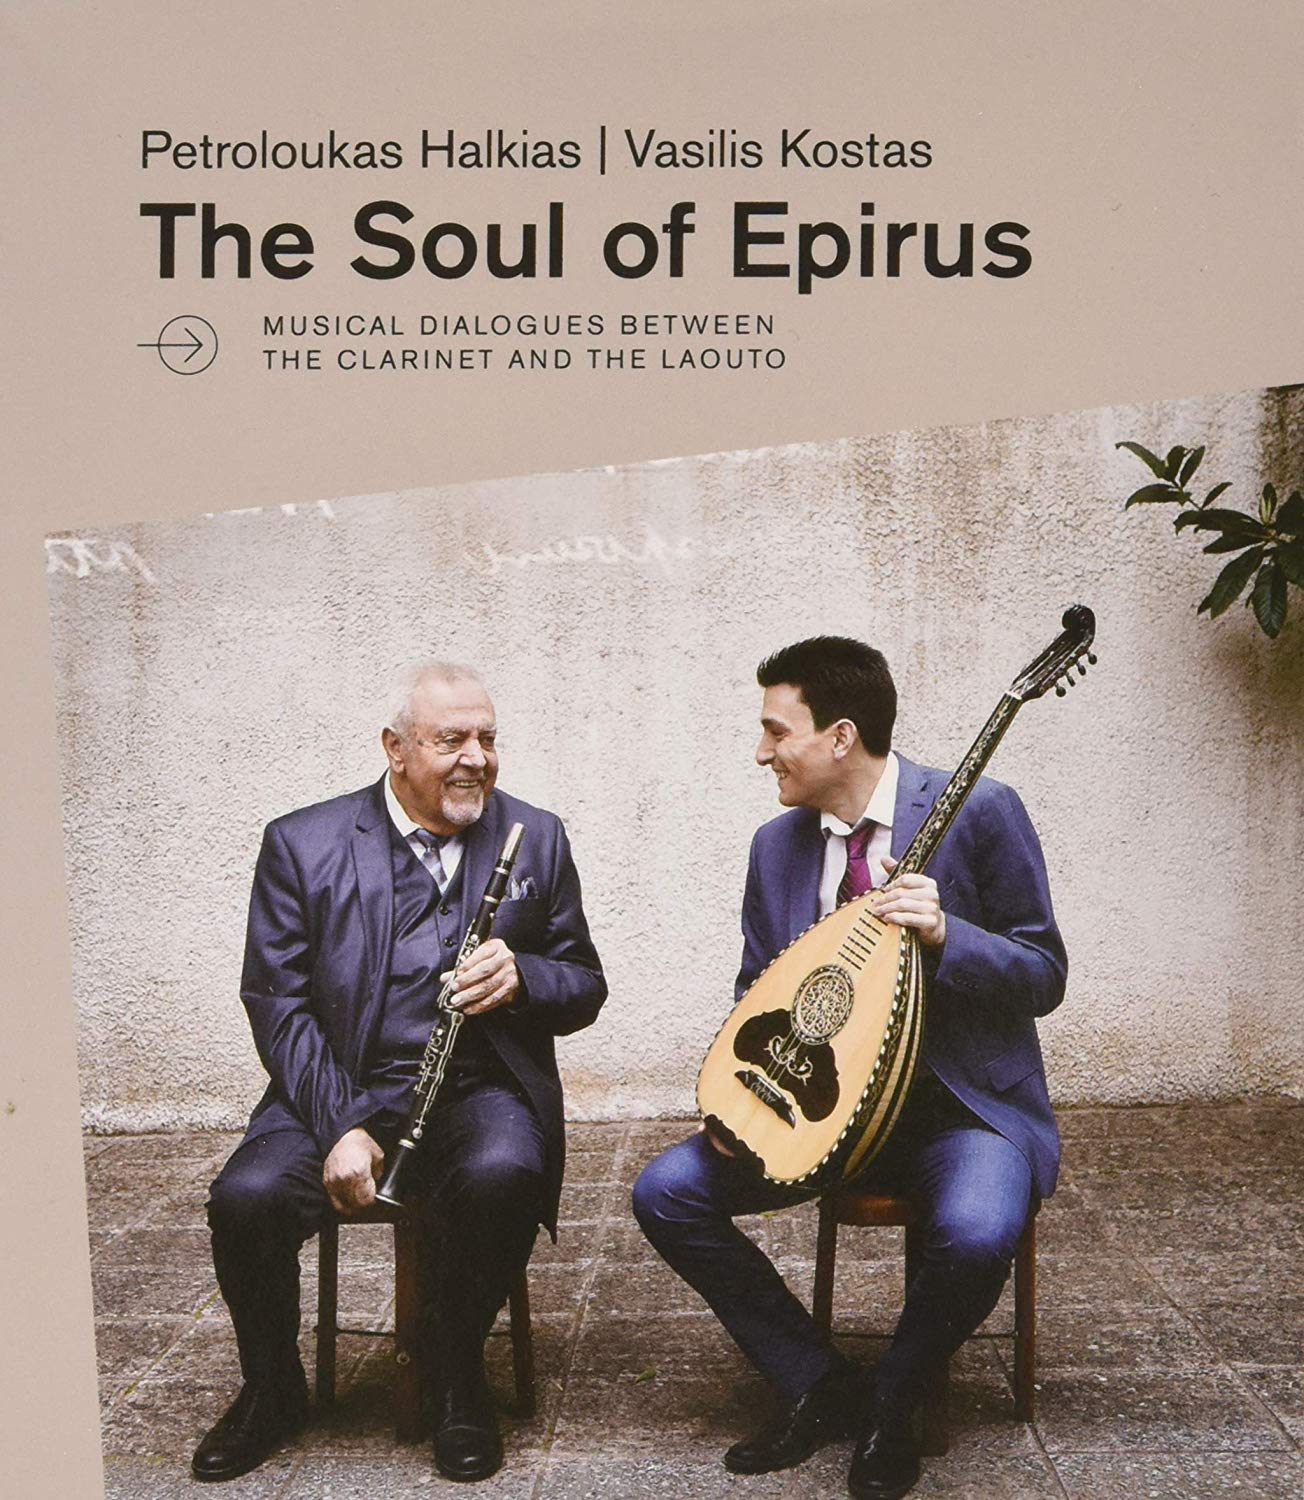 Audio Cd Petroloukas Halkias & Vasilis Kostas - The Soul Of Epirus NUOVO SIGILLATO, EDIZIONE DEL 04/10/2019 SUBITO DISPONIBILE